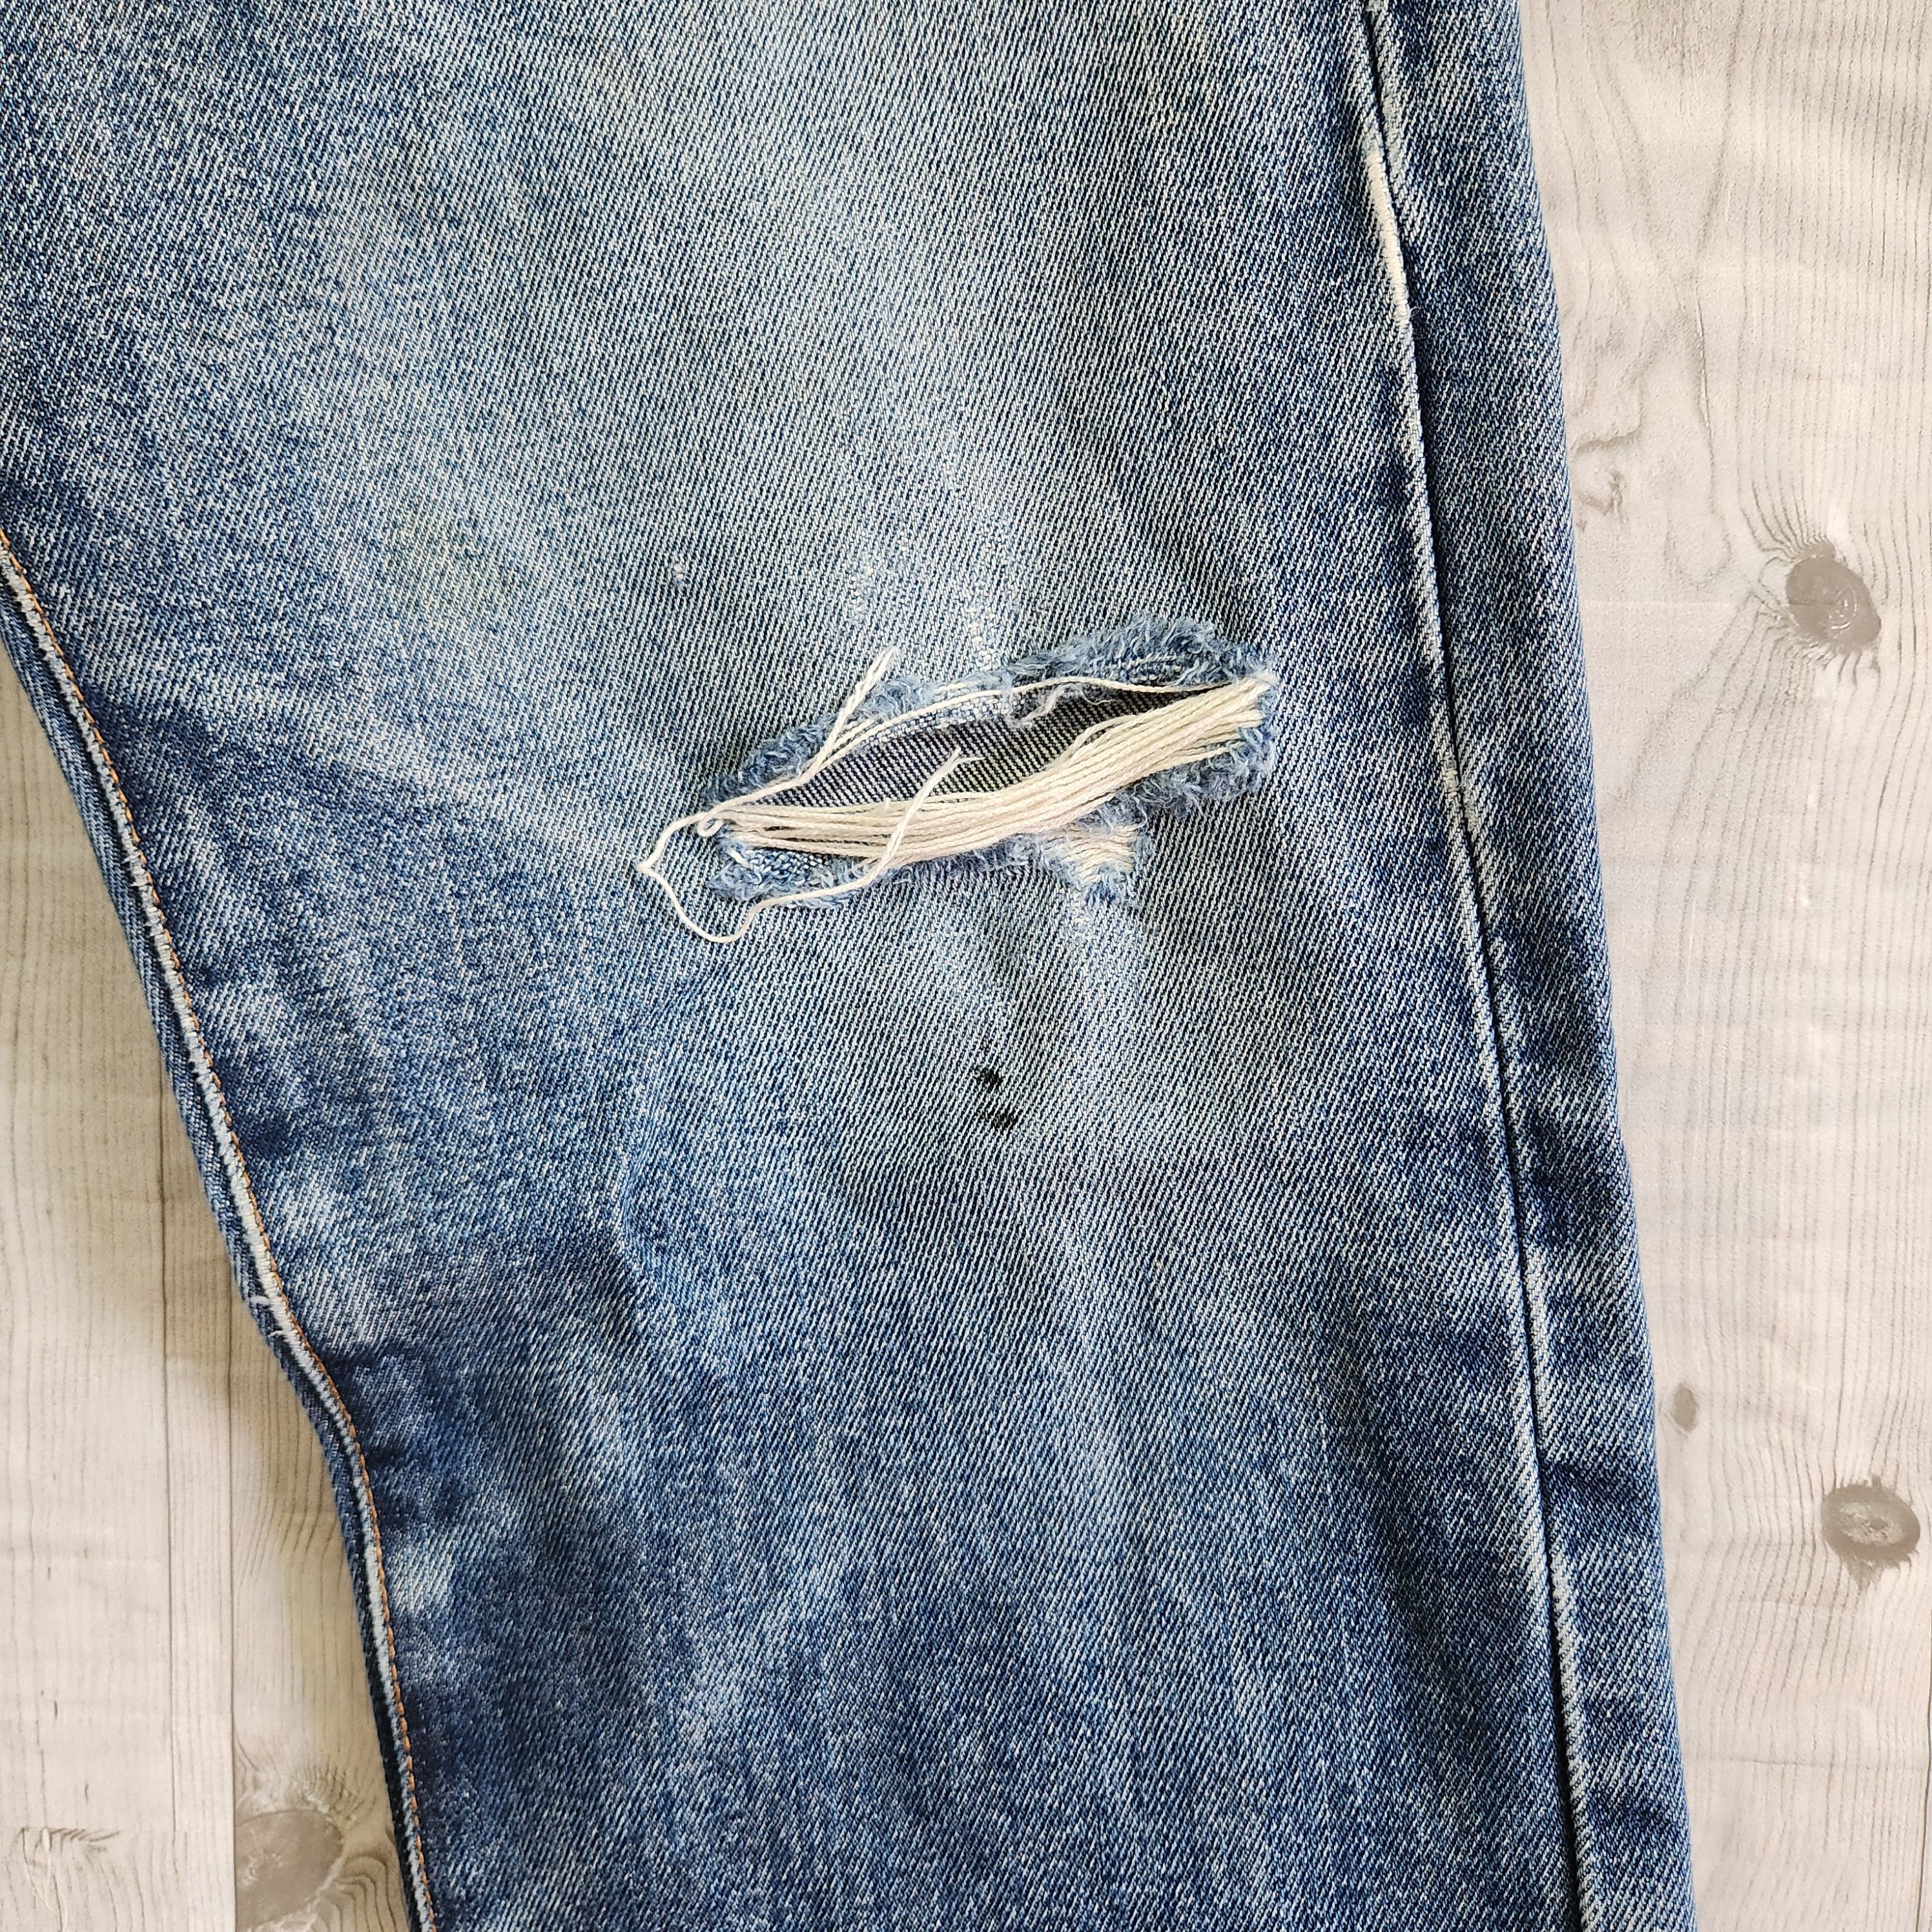 Japan Blue - Kojima Genes Japan Vintage Denim Blue Jeans Ripped - 13